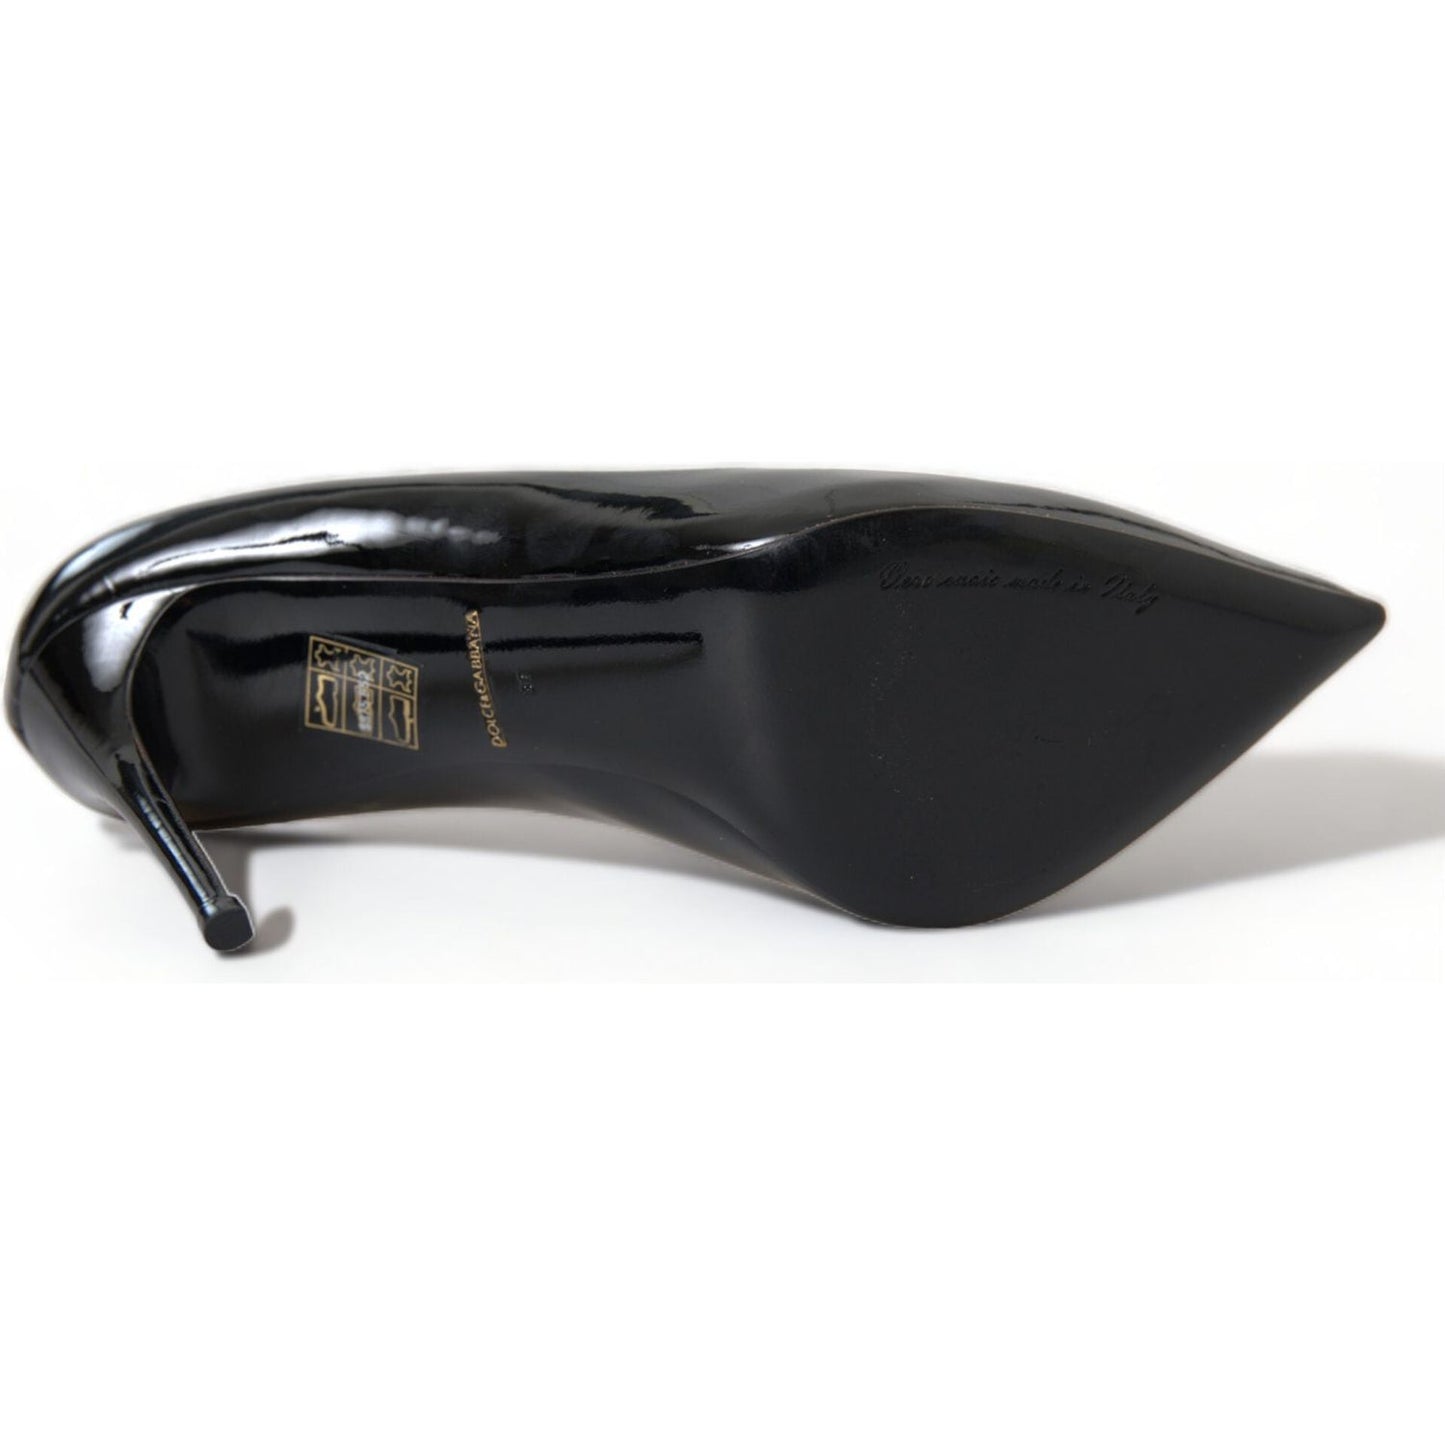 Dolce & Gabbana Elegant Black Patent Stiletto Heels black-patent-leather-pumps-heels-shoes